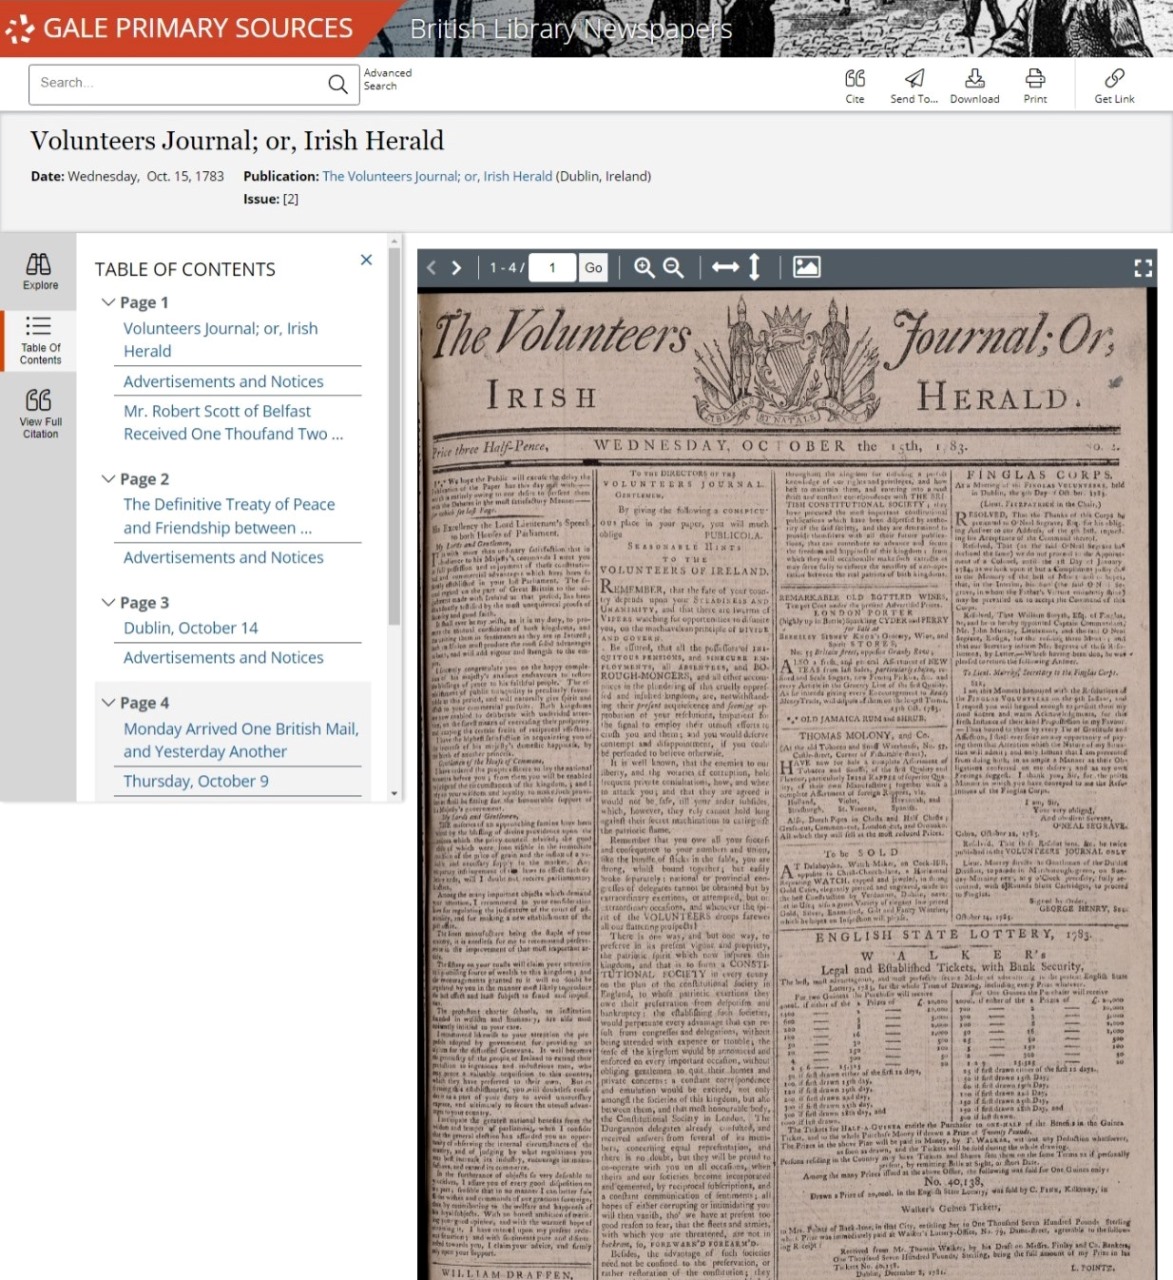 Volunteers Journal; or, Irish Herald, 15 Oct. 1783. British Library Newspapers Part VI: Ireland, 1783-1950